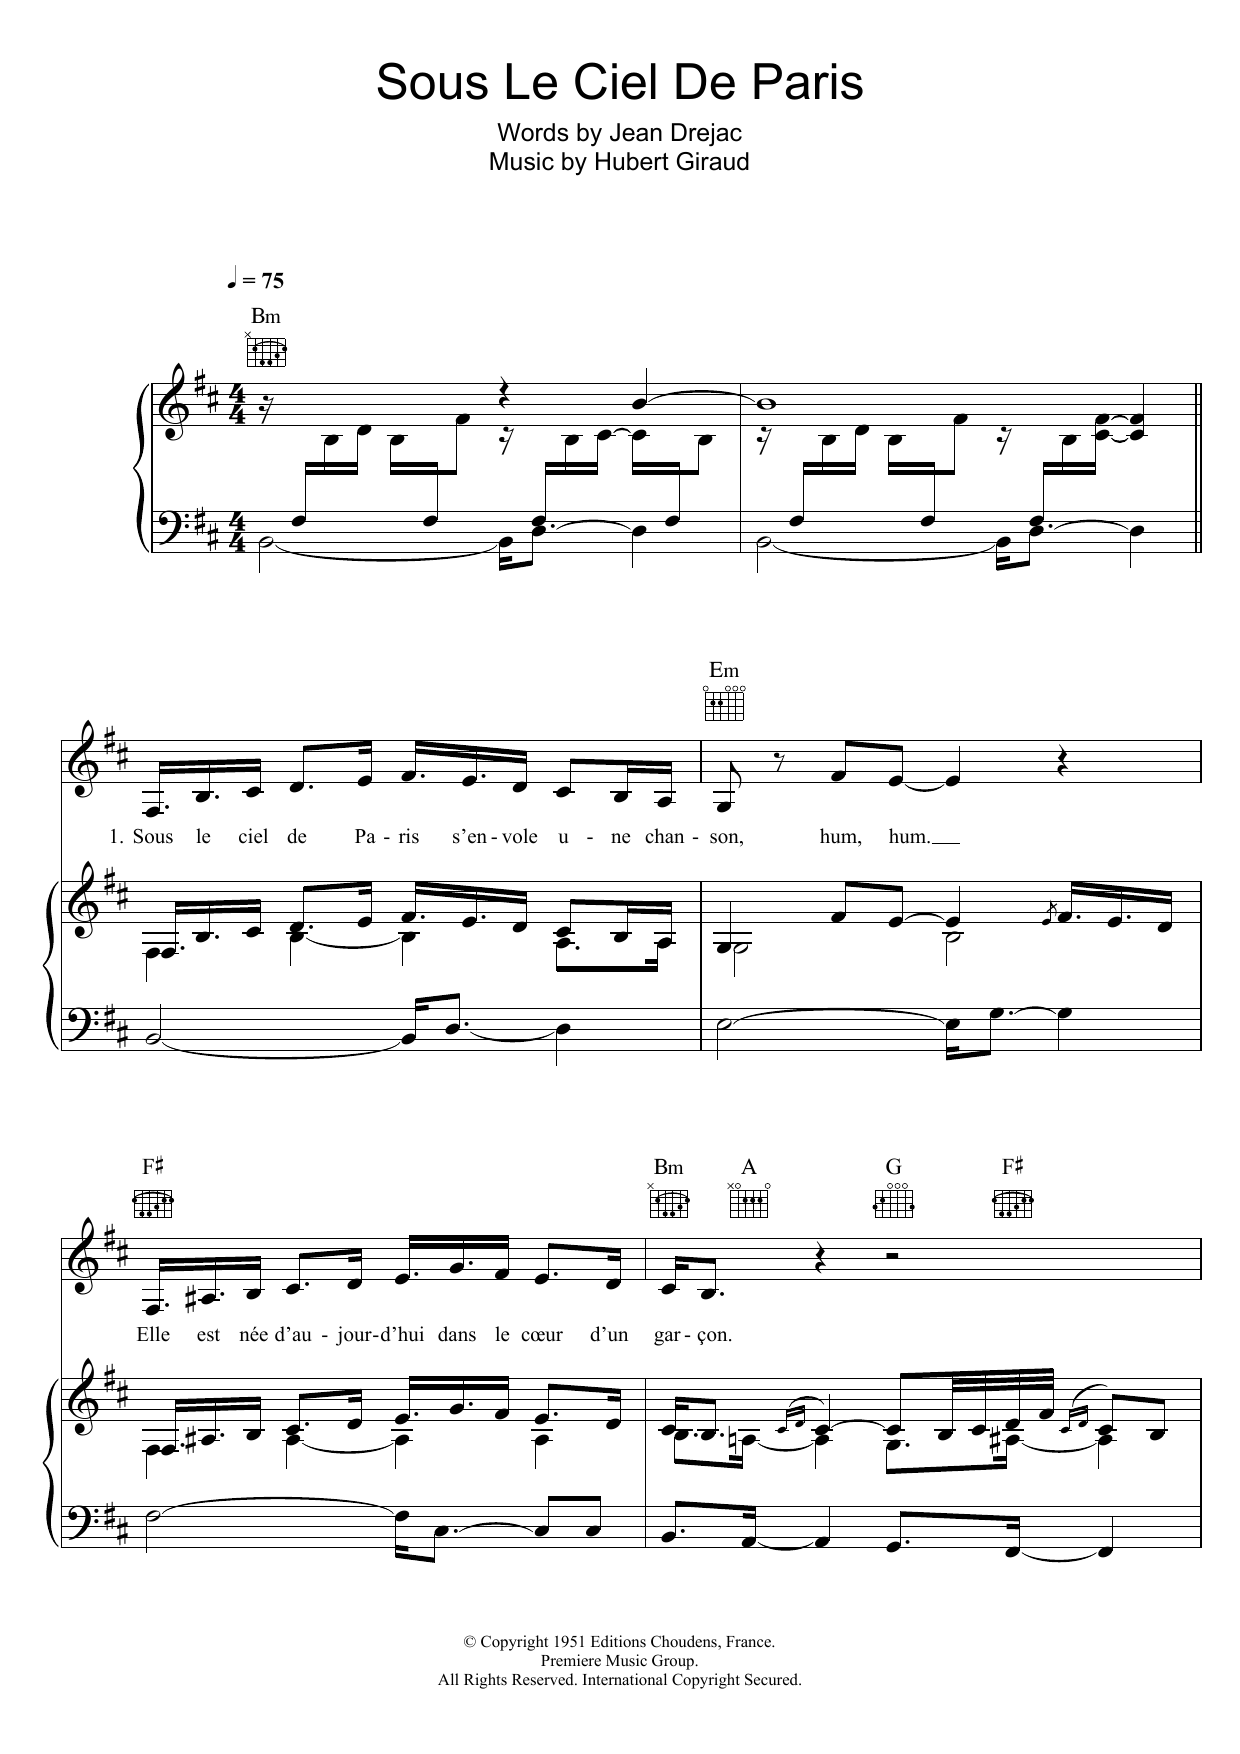 Zaz Sous Le Ciel De Paris Sheet Music Notes & Chords for Piano, Vocal & Guitar (Right-Hand Melody) - Download or Print PDF